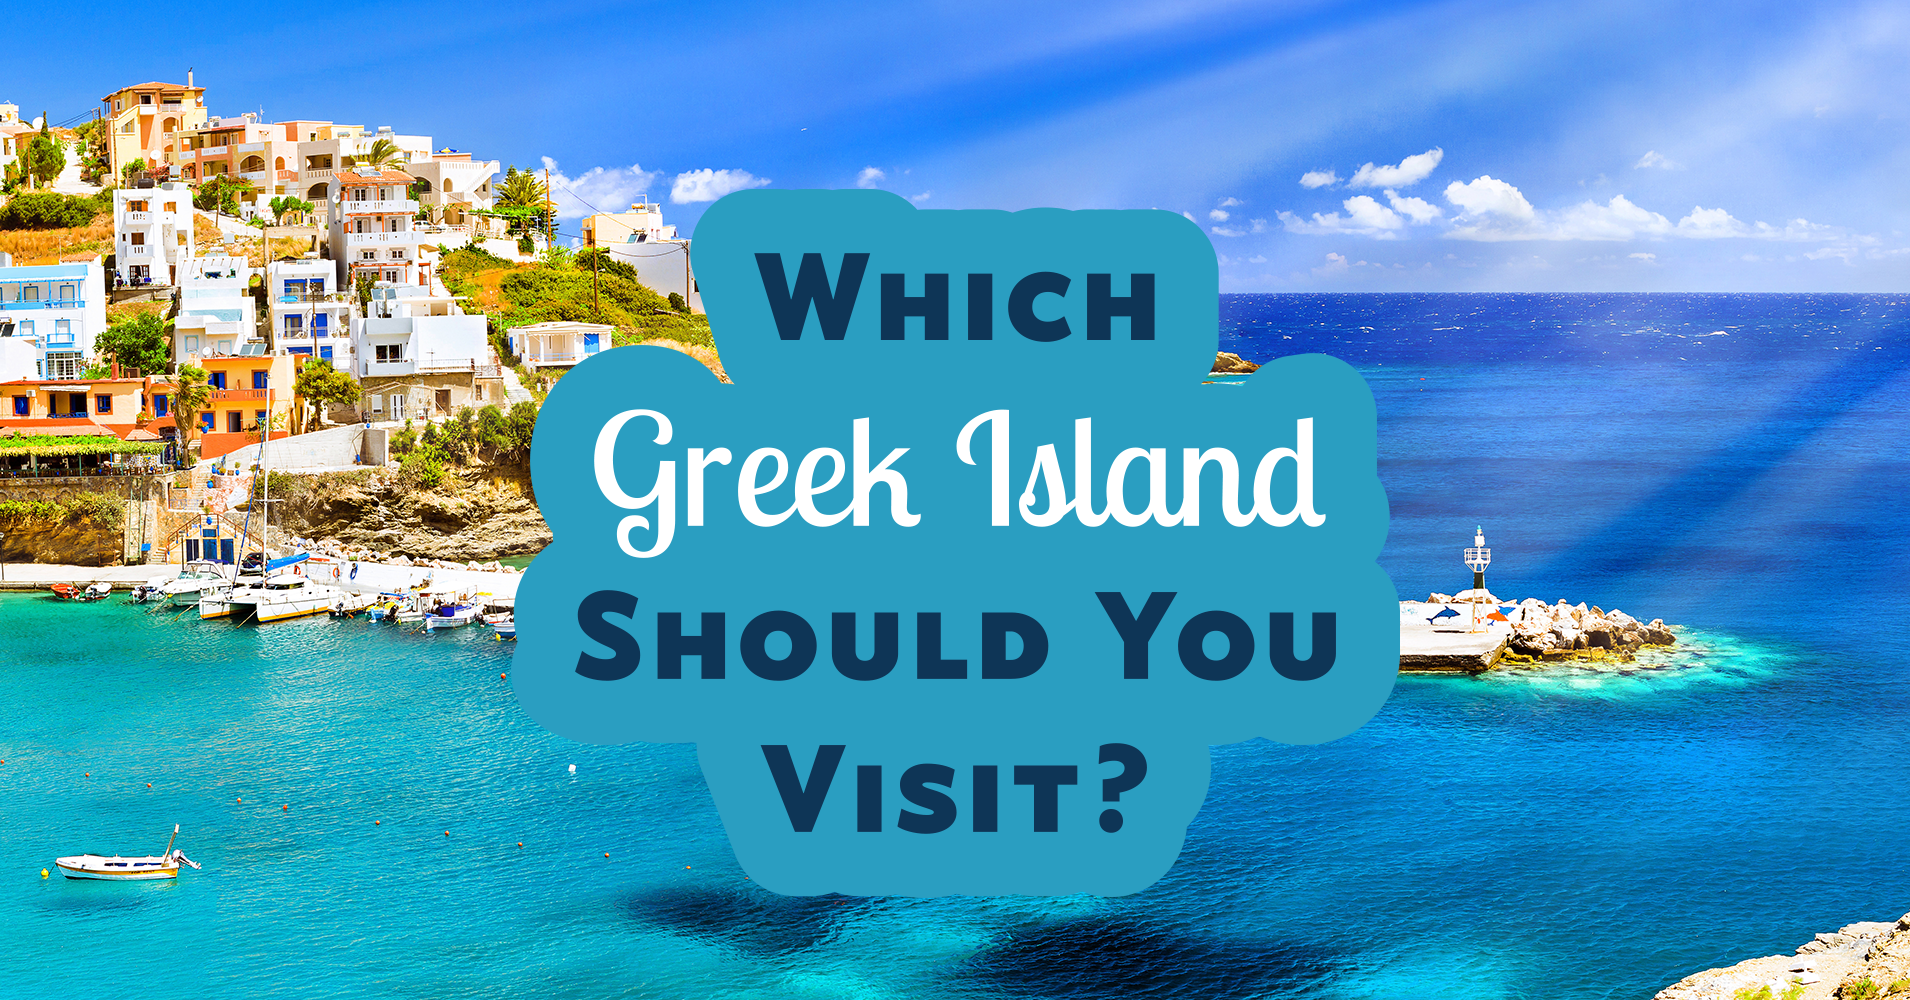 Which Greek Island Should You Visit? - Quiz - Quizony.com